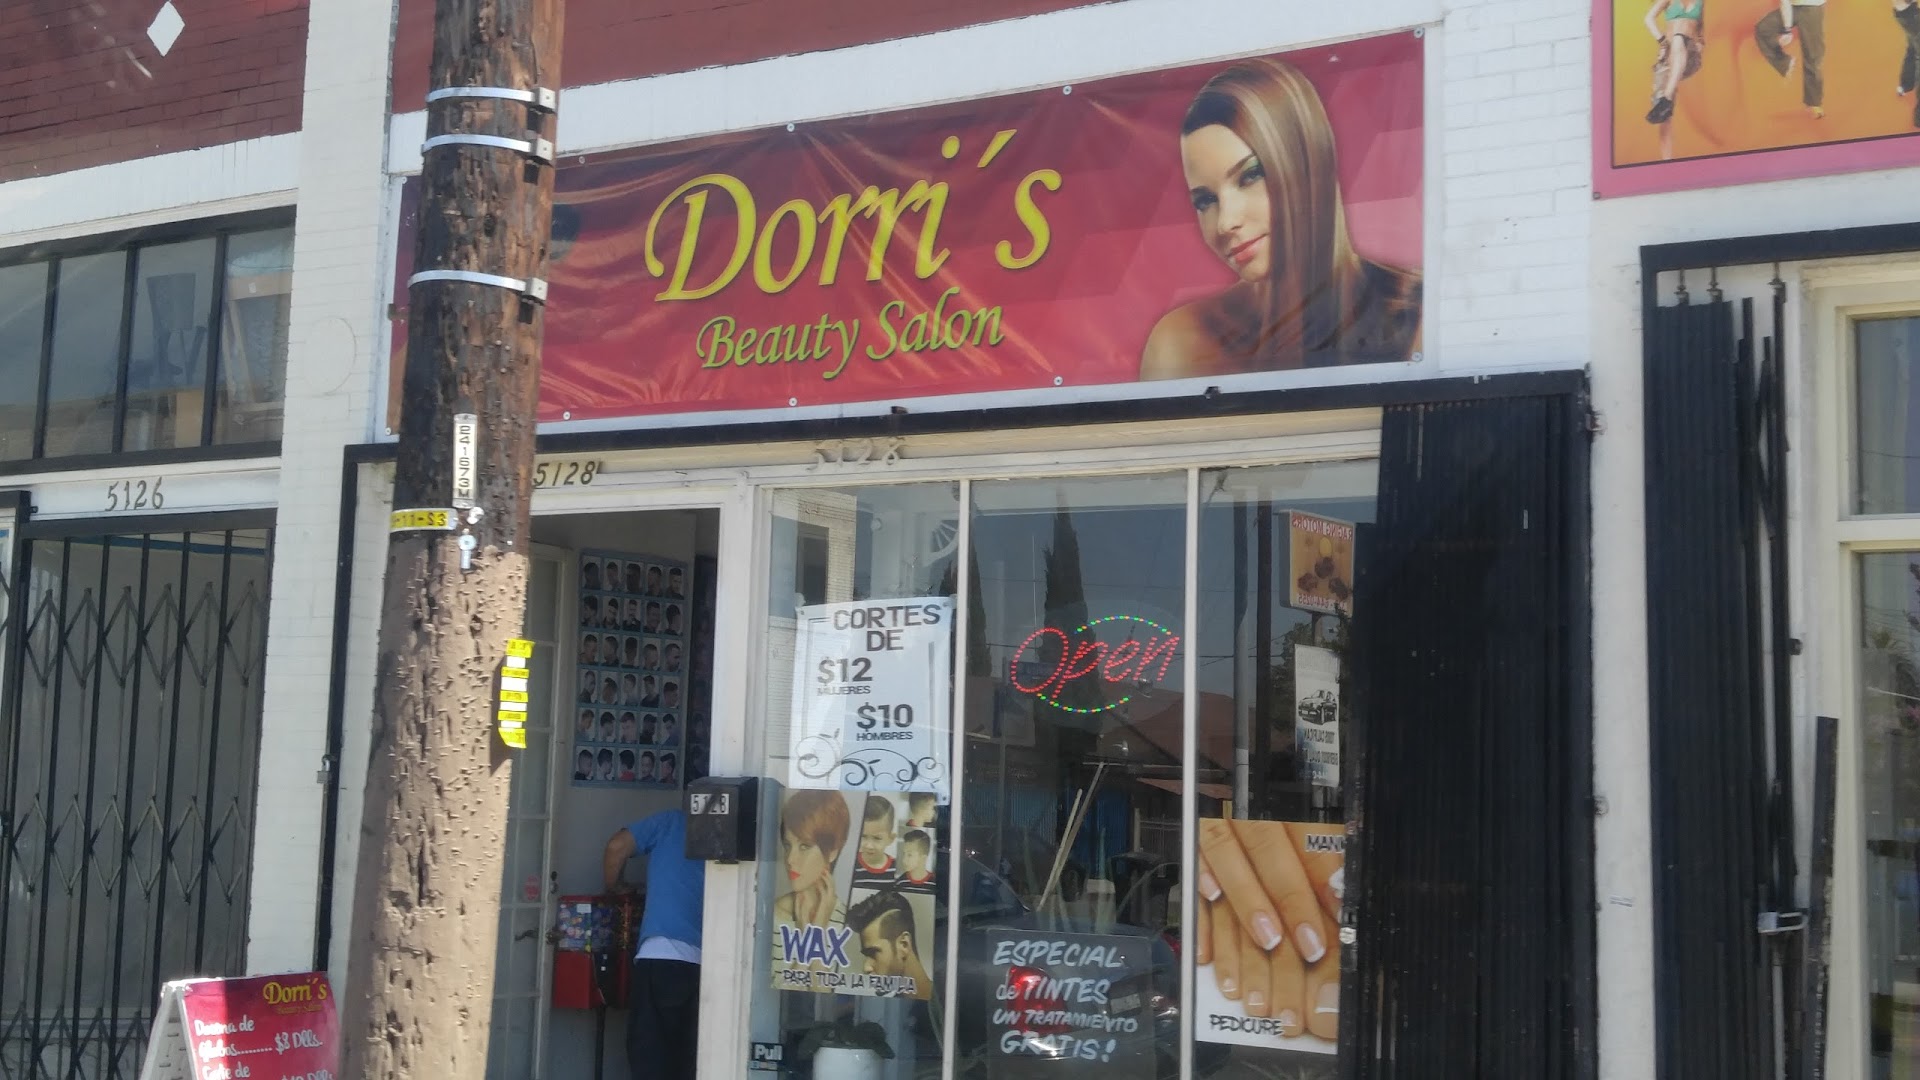 Dorri's Beauty Salon